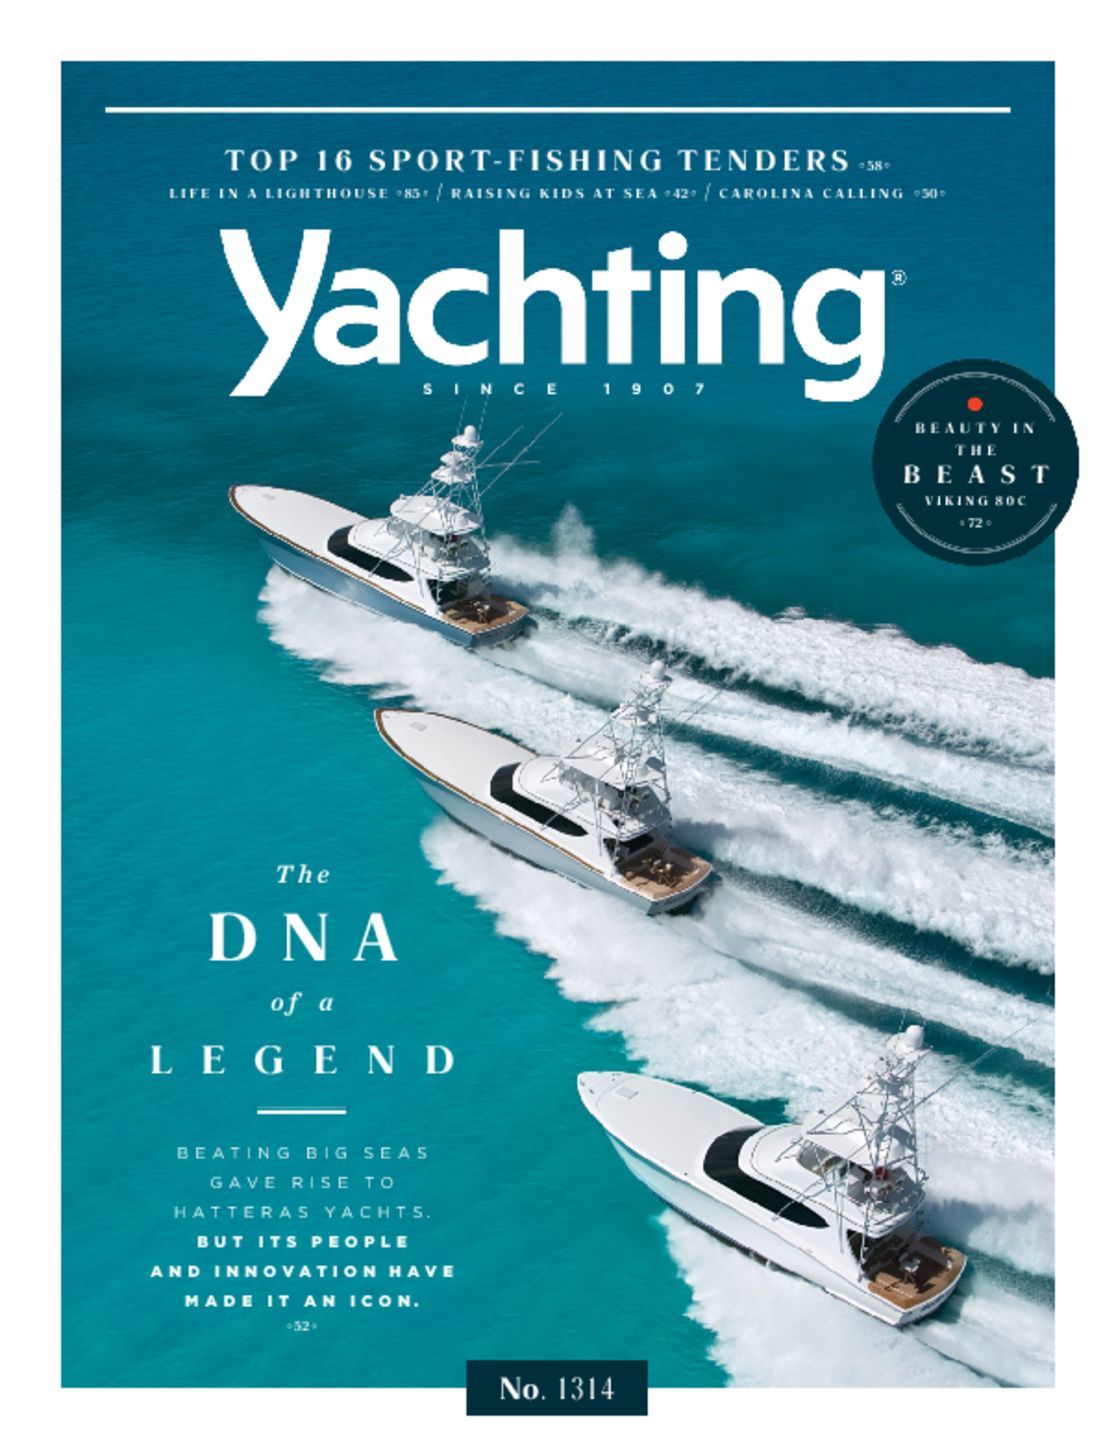 yachting life magazine